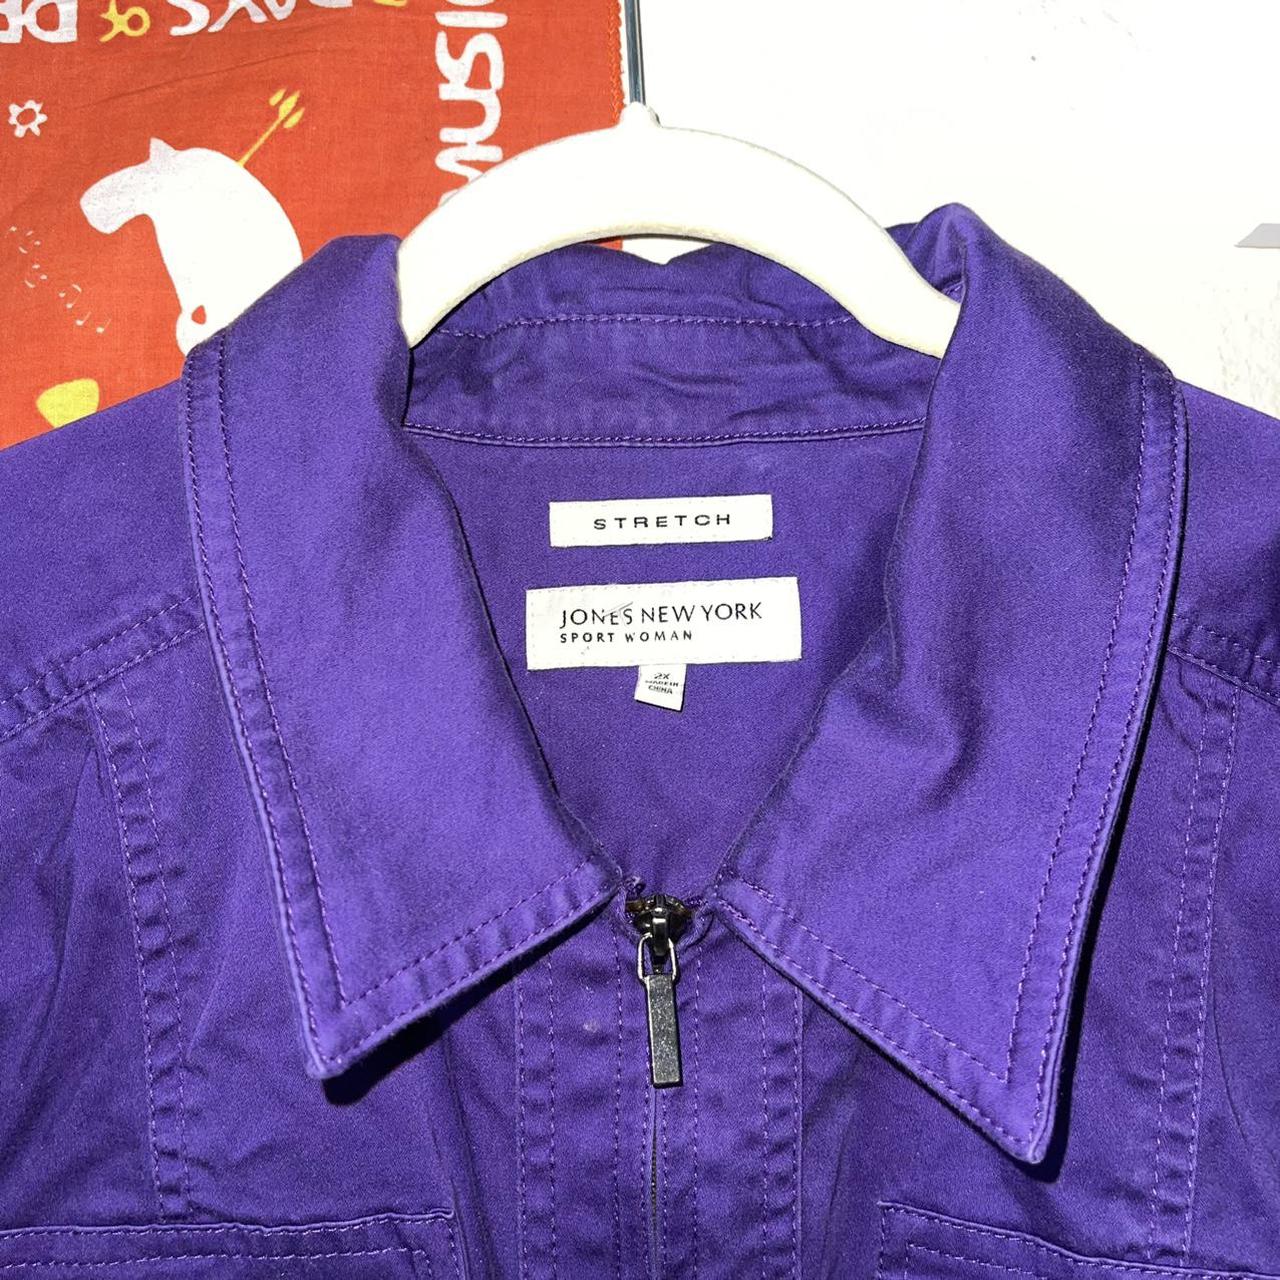 Product Image 2 - Jones New York purple jacket.